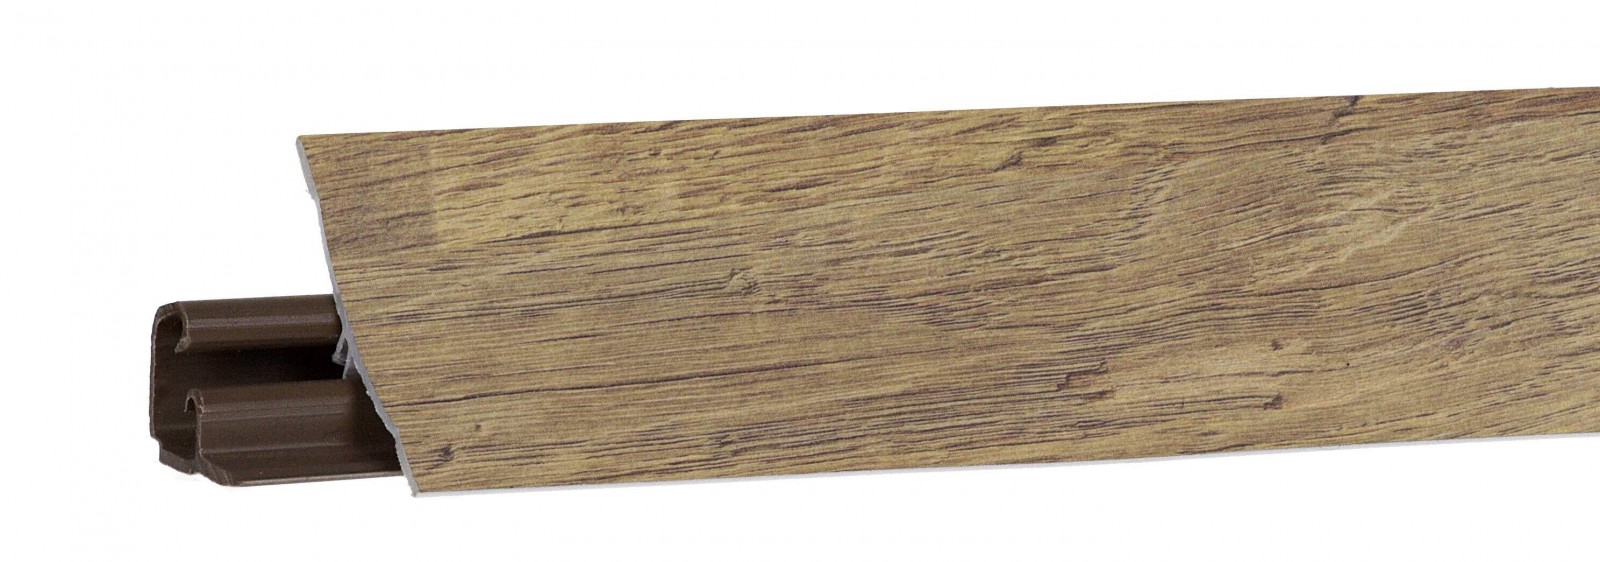 Плинтус пристенный, древесина винтаж натуральная 3,0 м LB-231-7003 KORNER - фото - 1